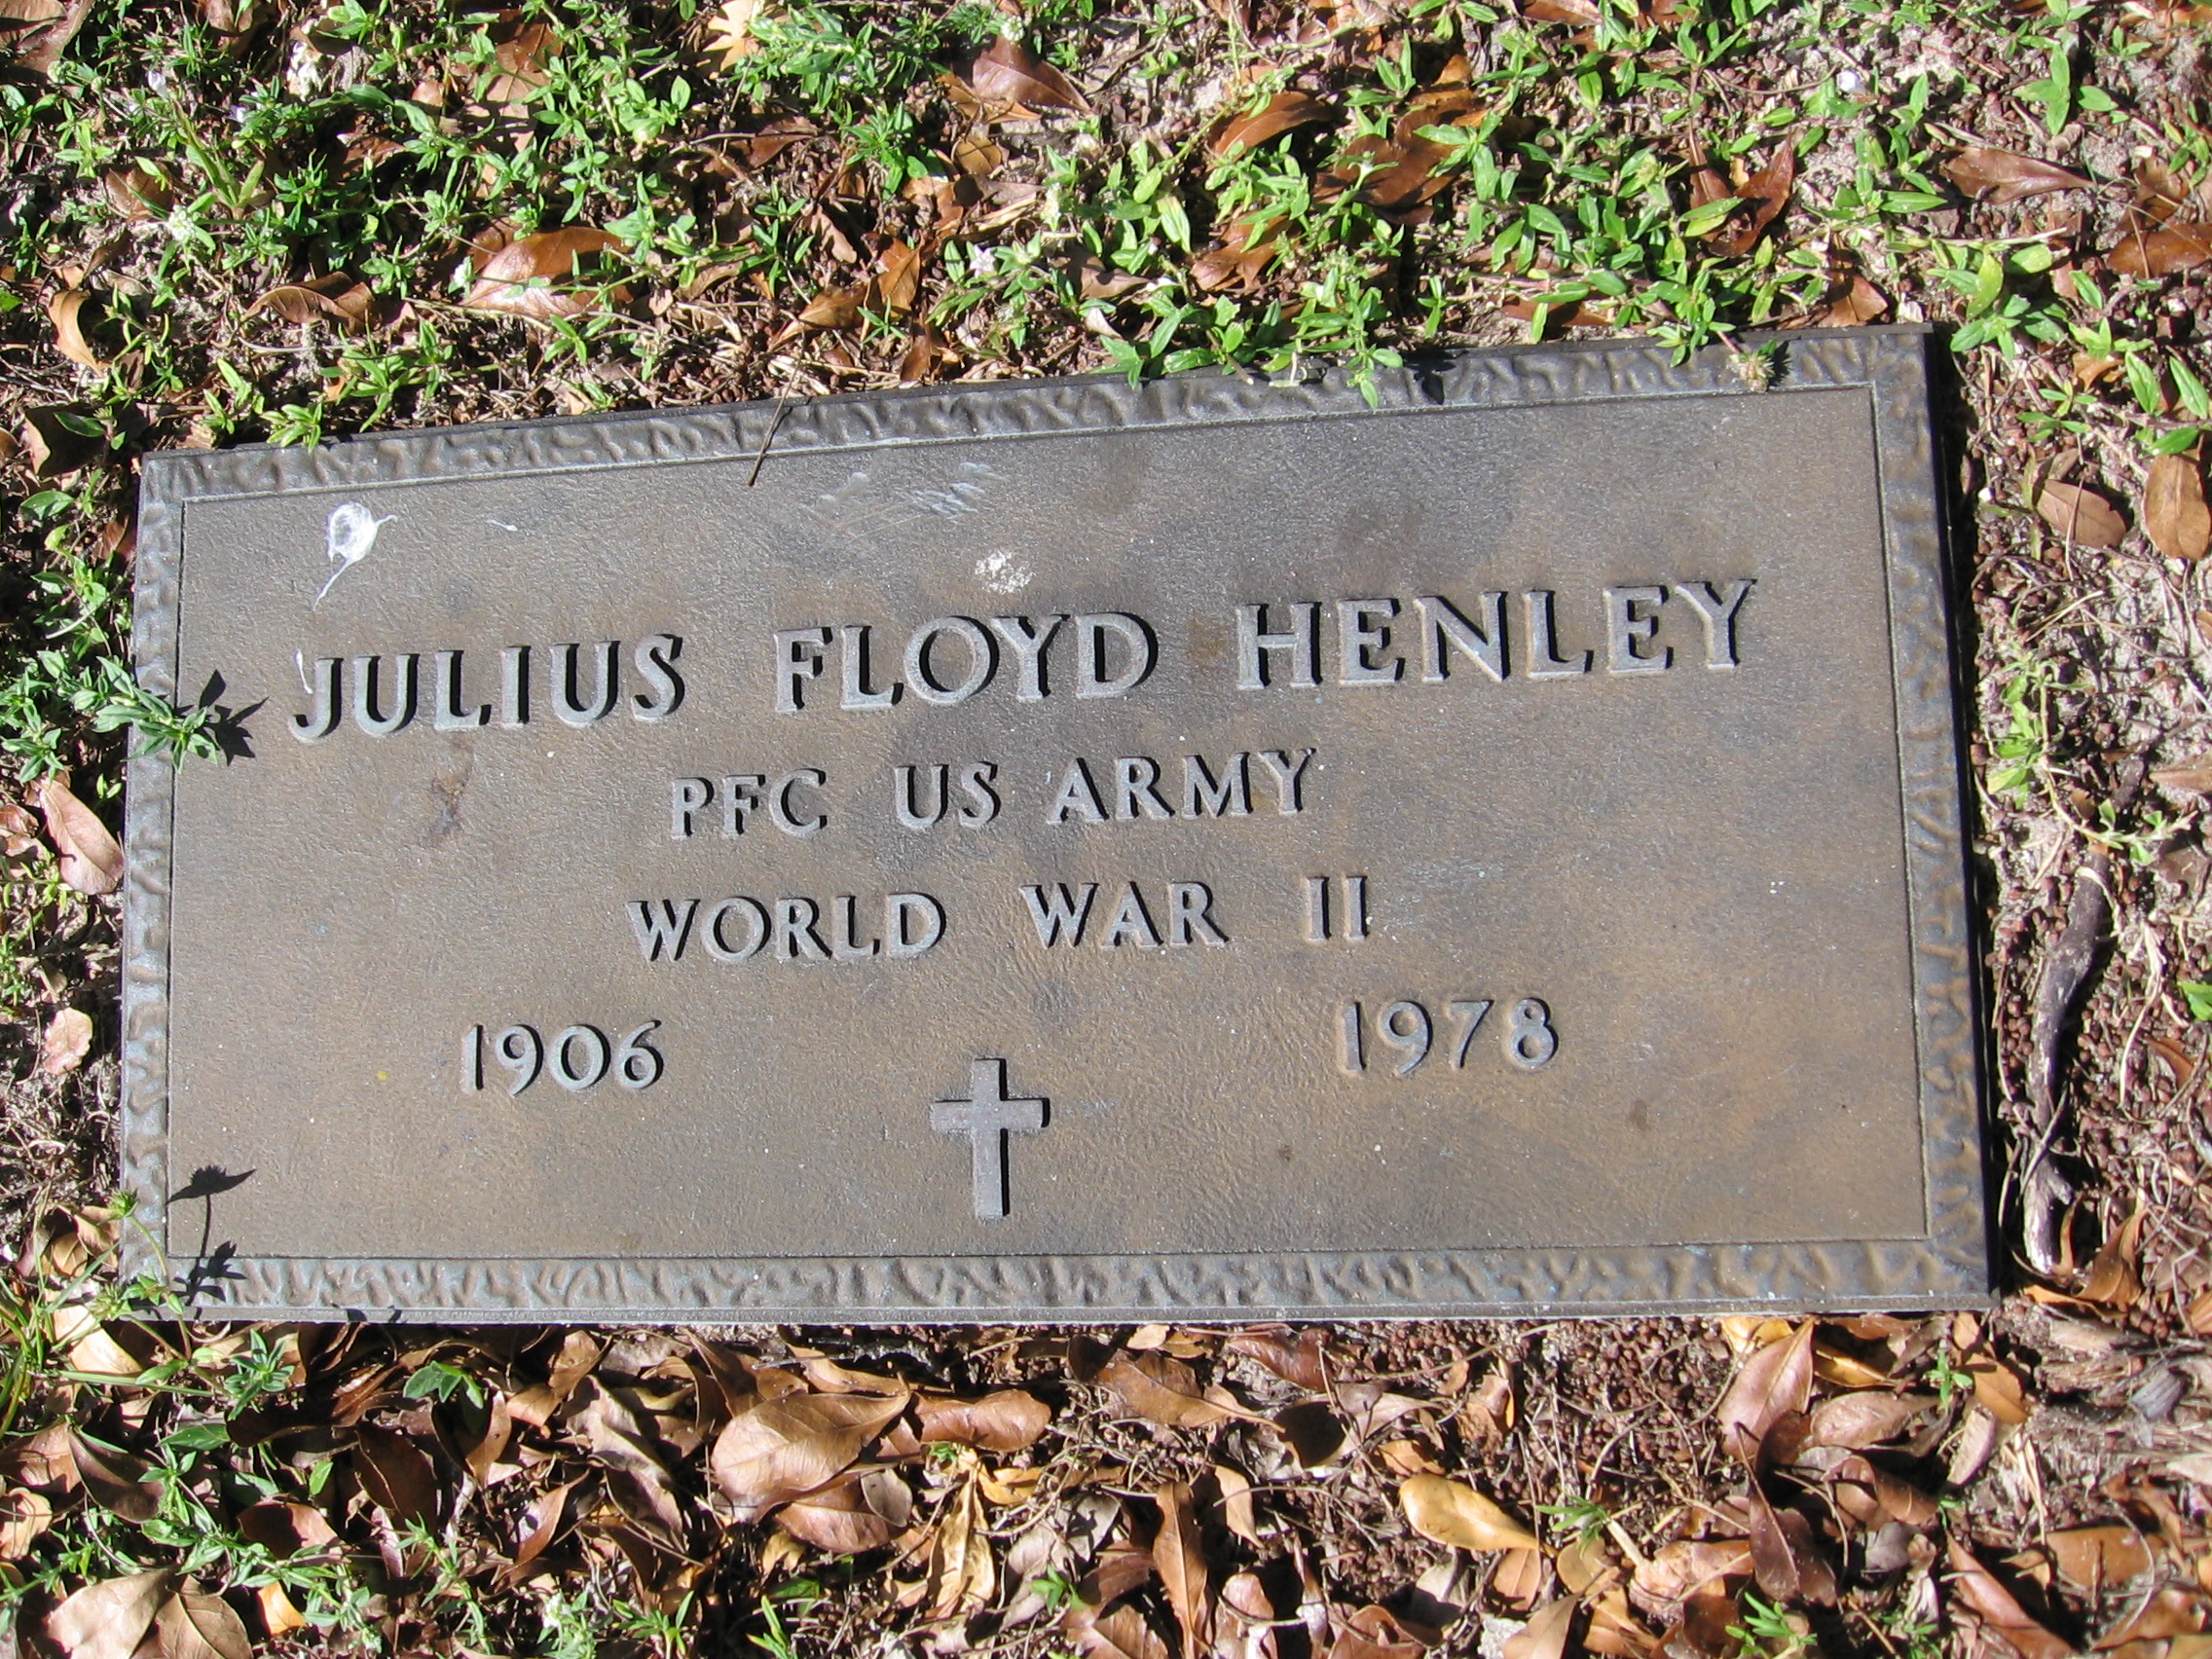 PFC Julius Floyd Henley